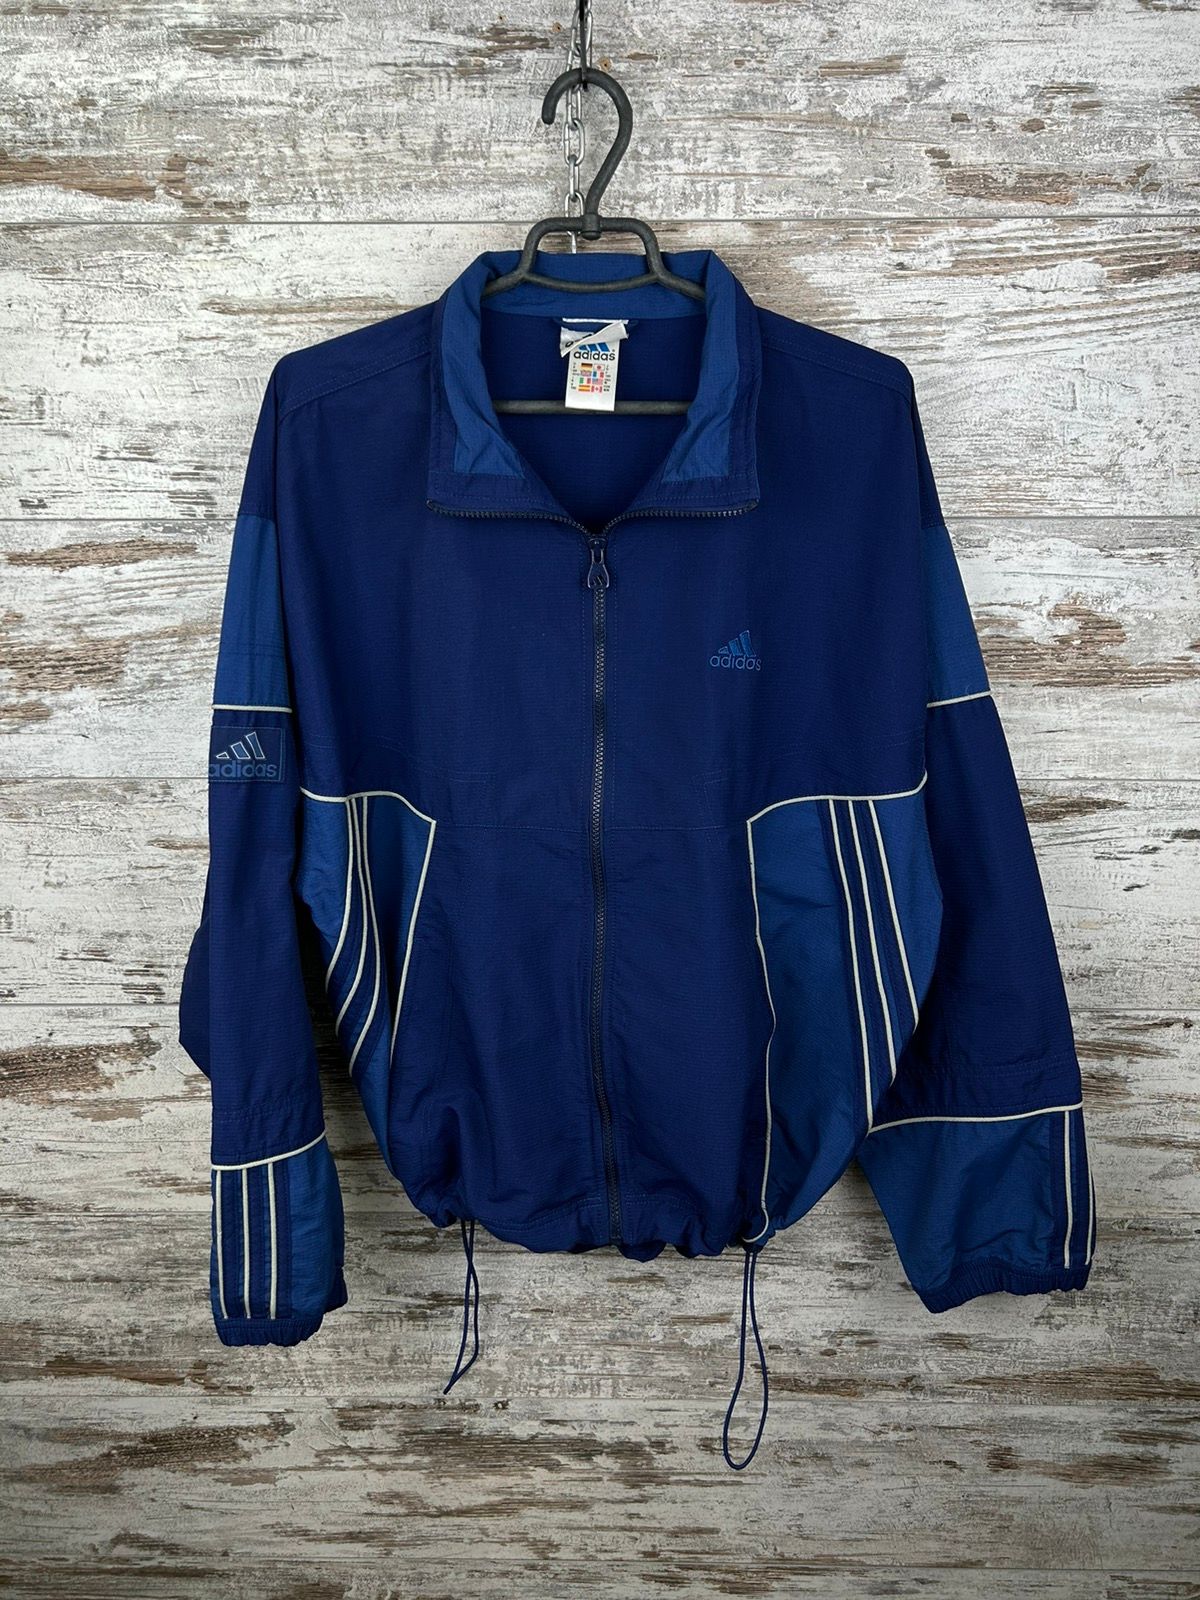 Adidas Mens Vintage Adidas Stripes Olympic track jacket y2k rare Size US M / EU 48-50 / 2 - 1 Preview